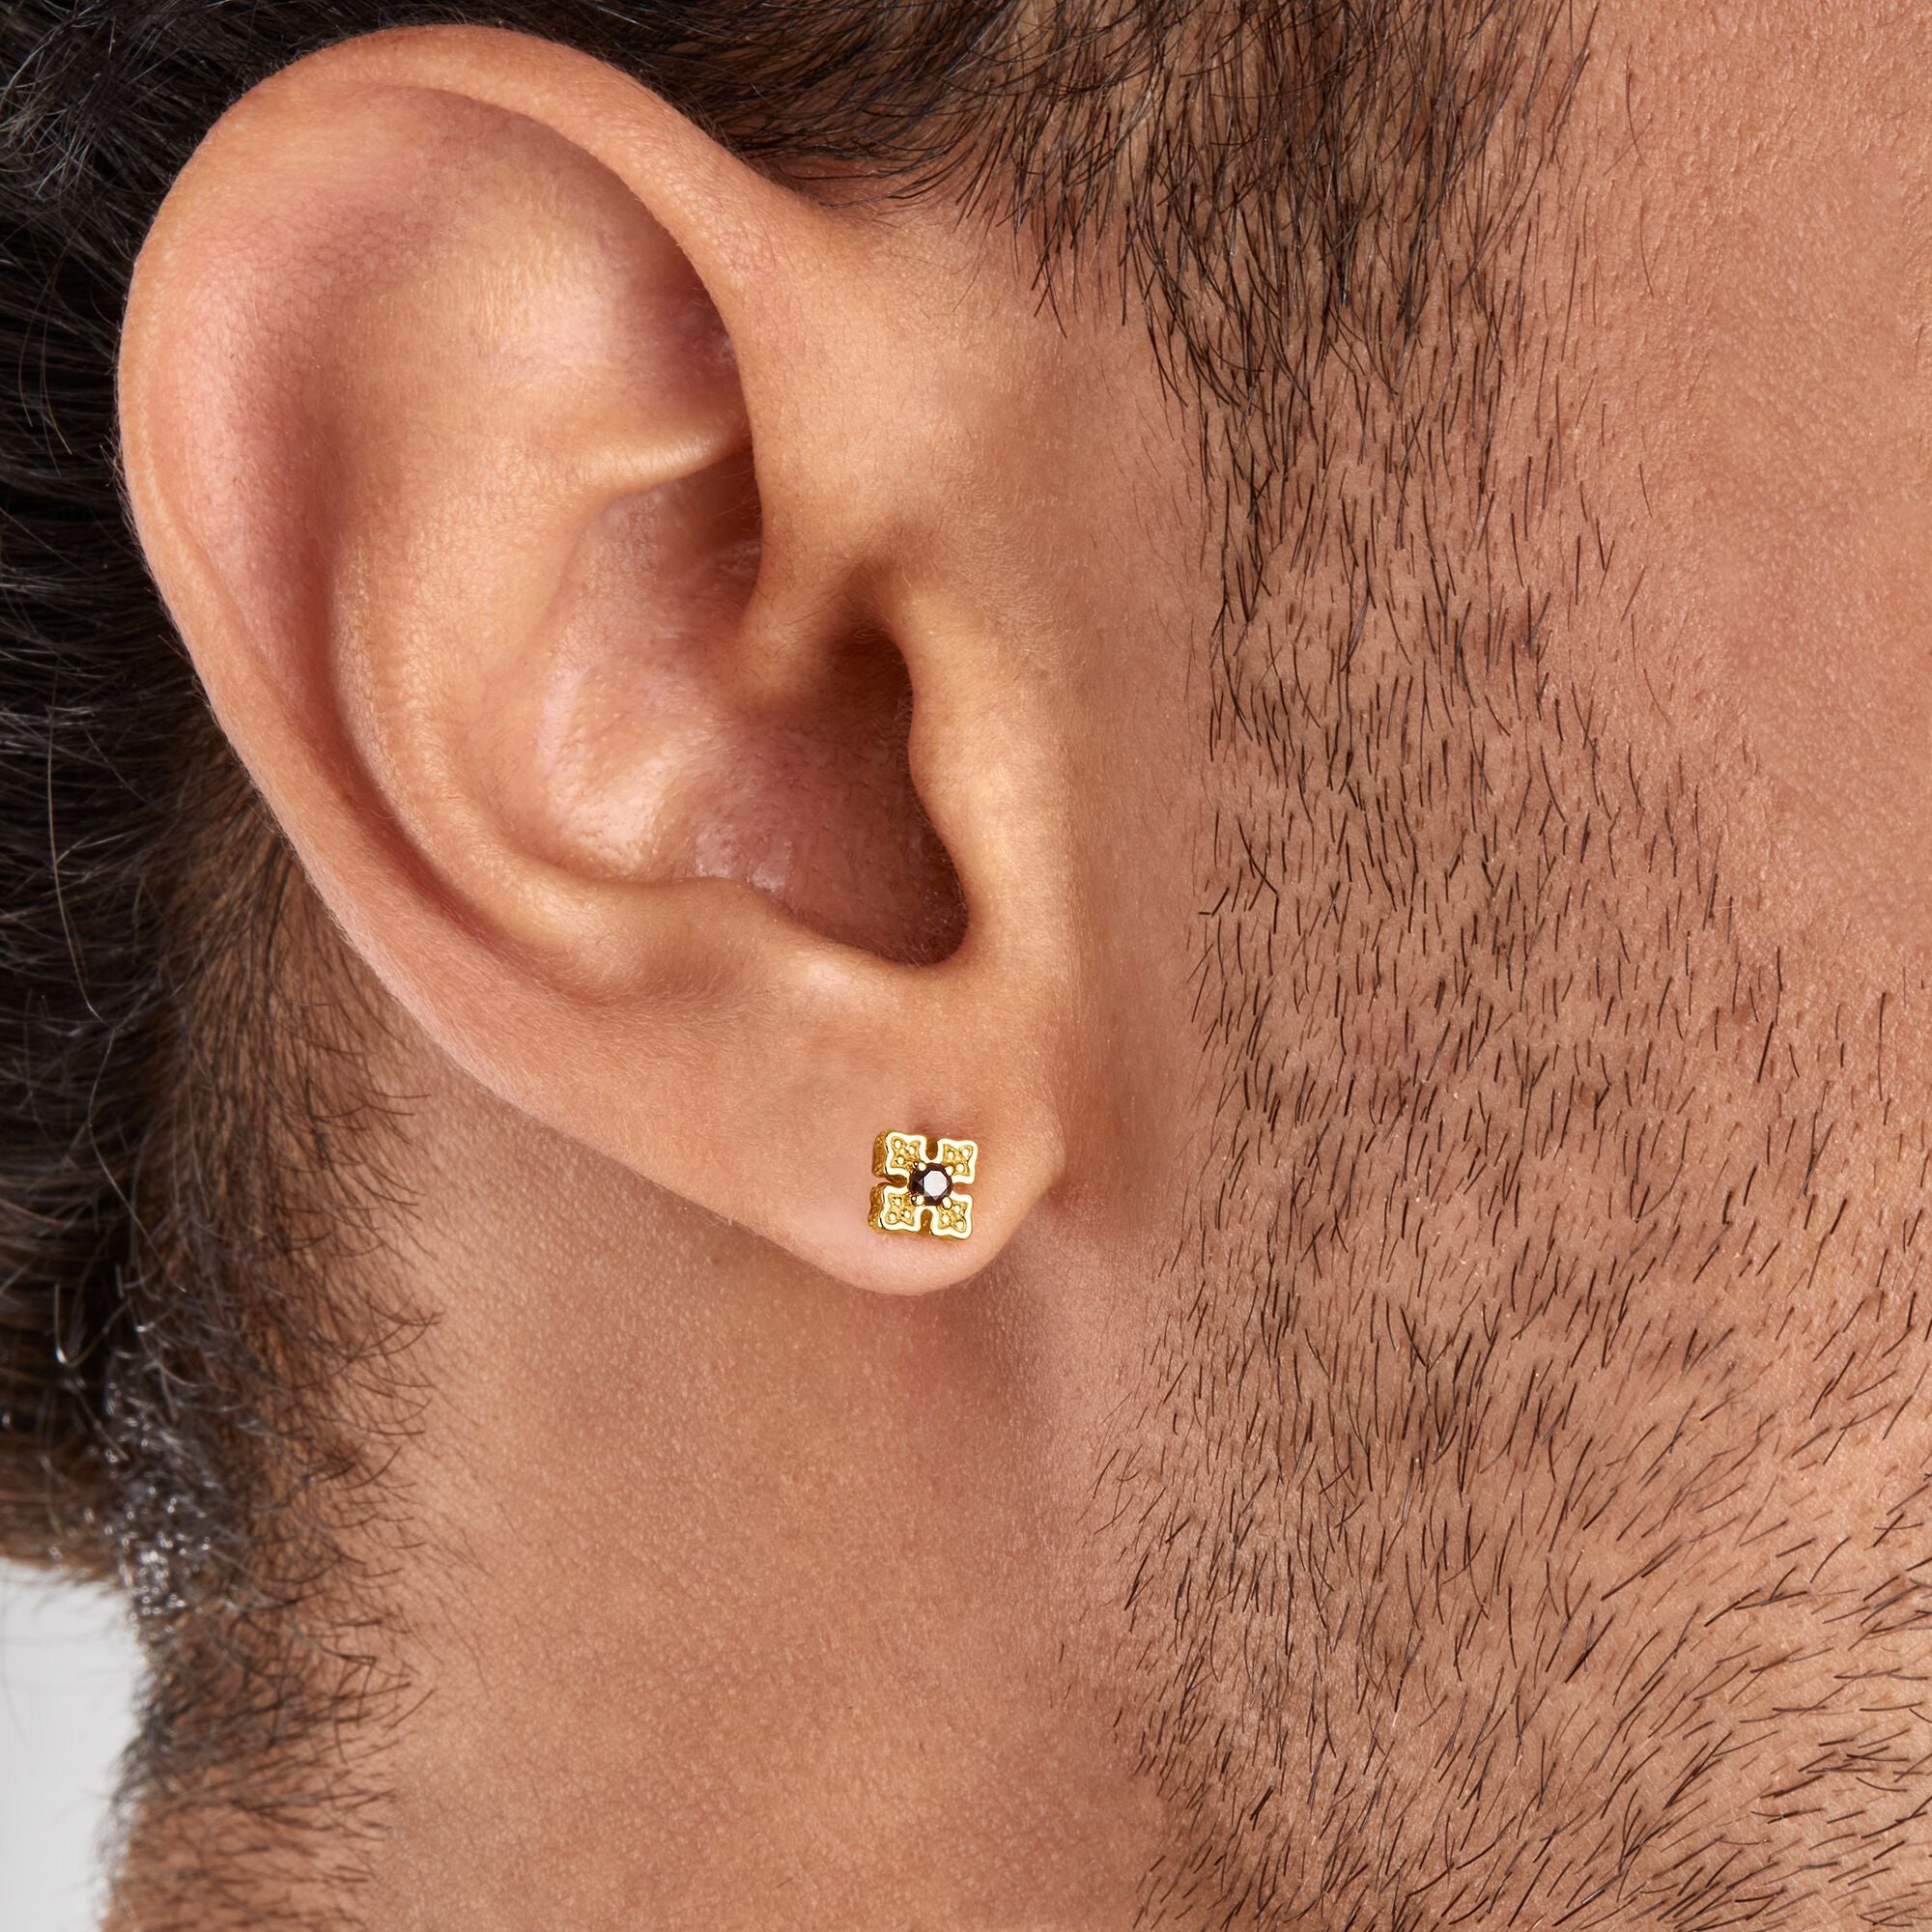 Thomas Sabo 18k Gold Plated Royalty Ear Studs on a man's ear